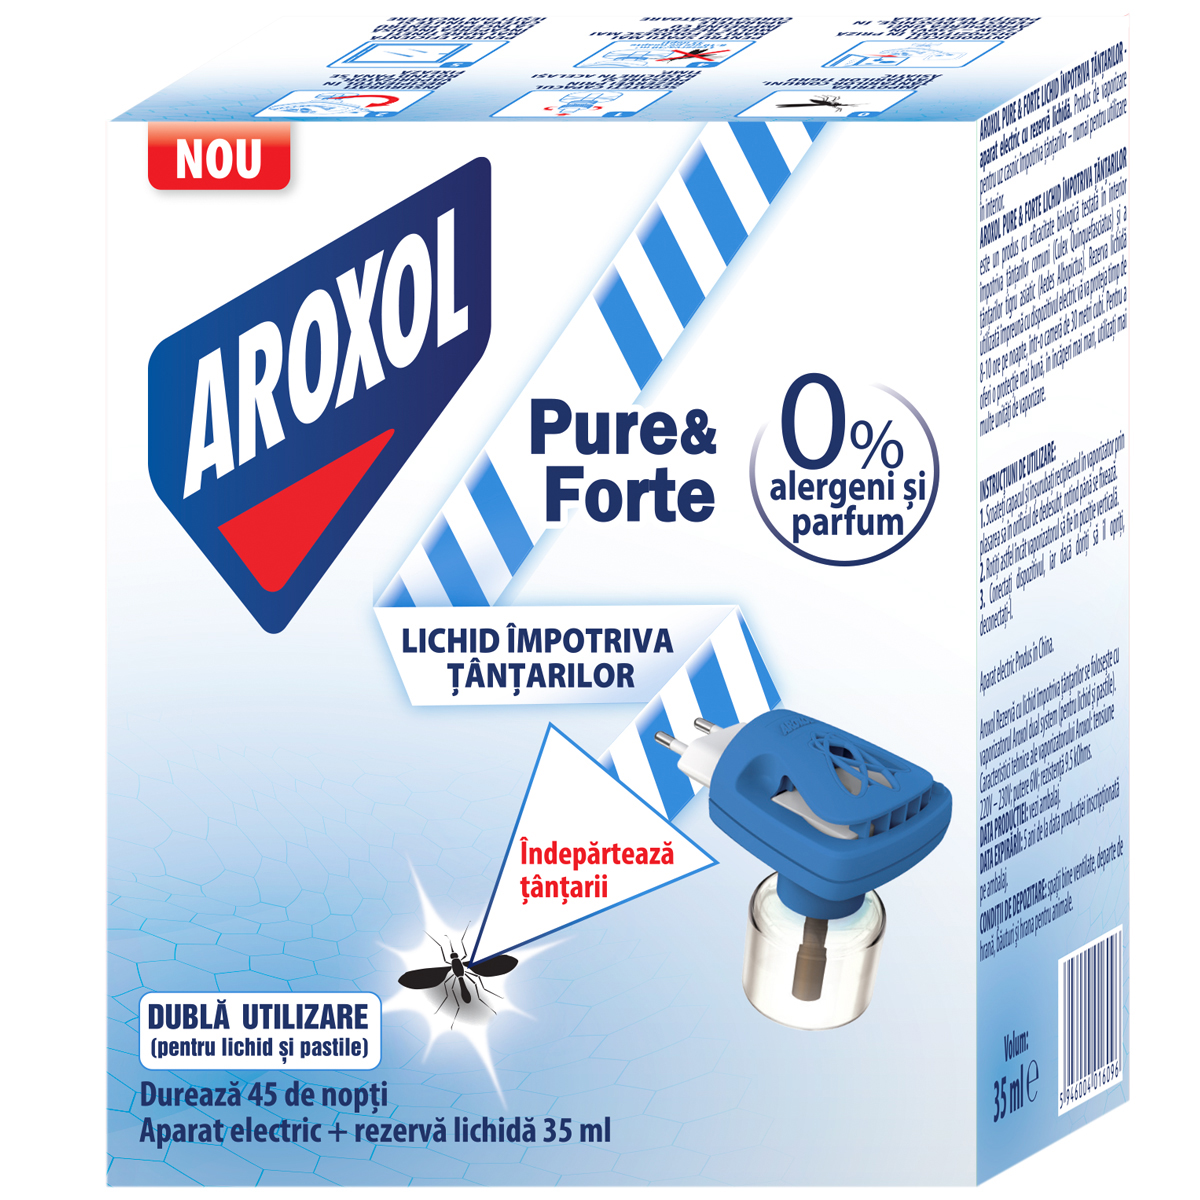 Aparat electric Pure&Forte Aroxol cu rezerva lichida 35 ml Aparat